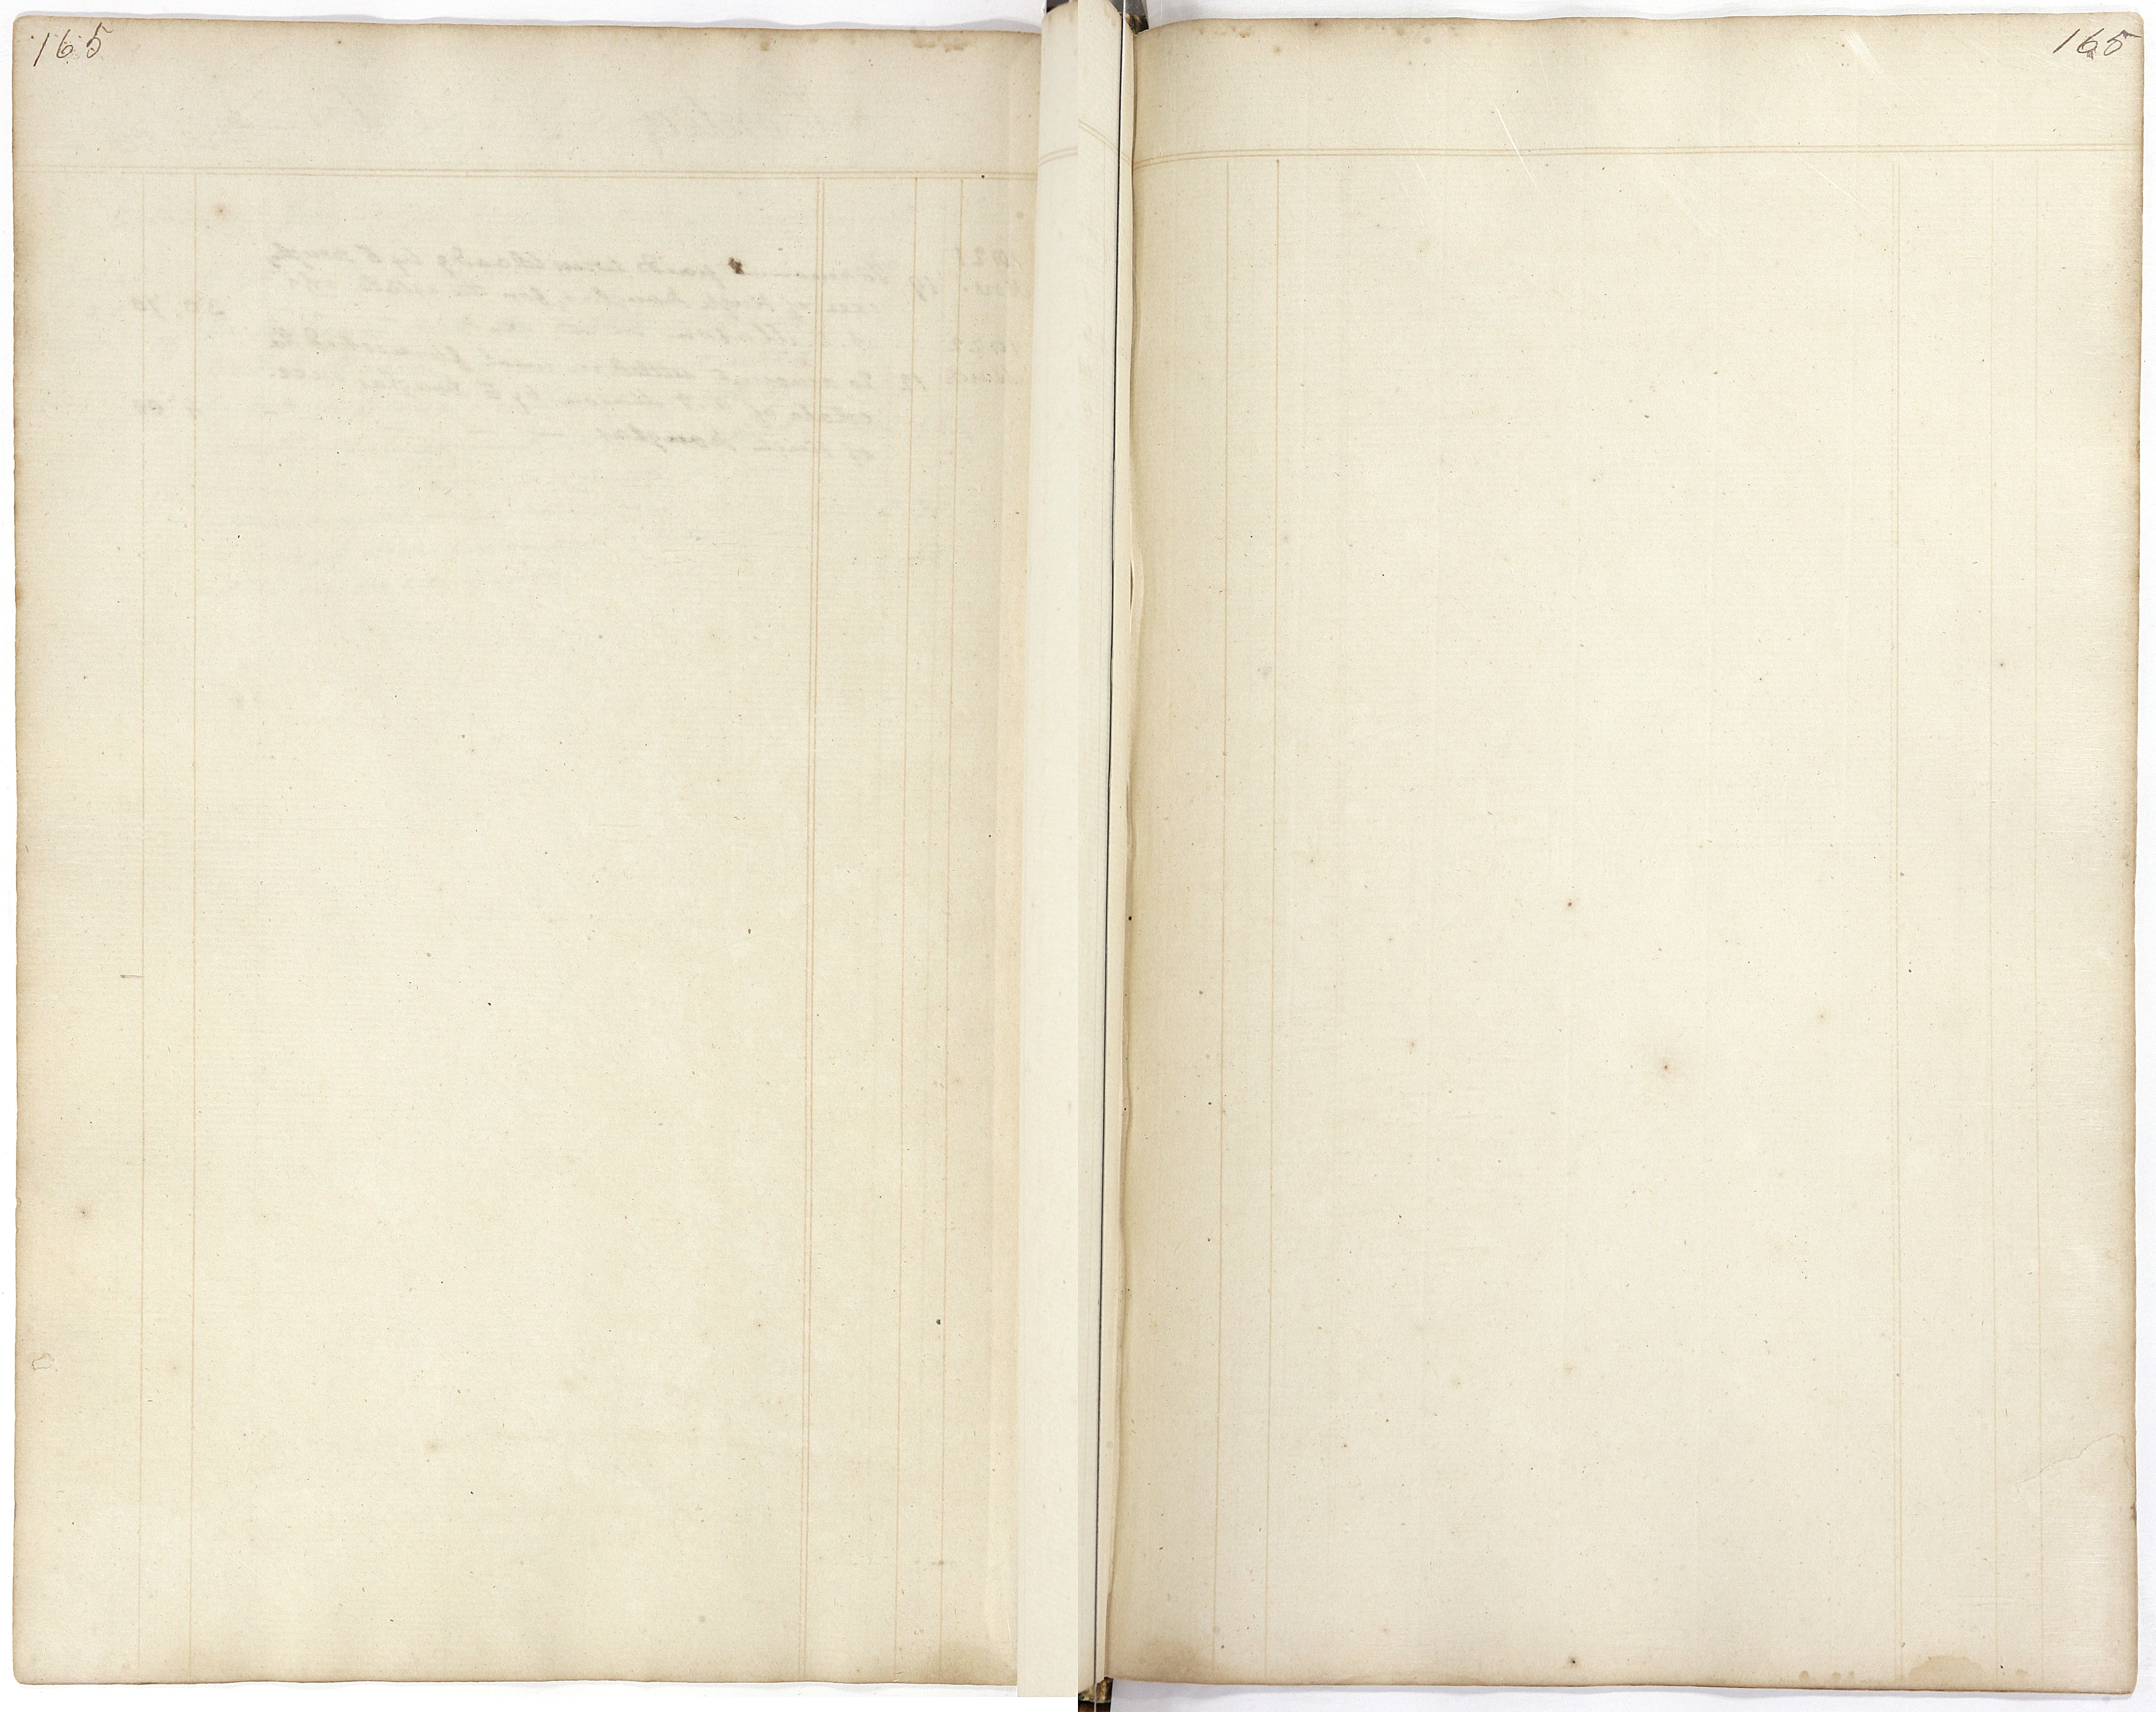 Image of Folio 165 (transcription below)